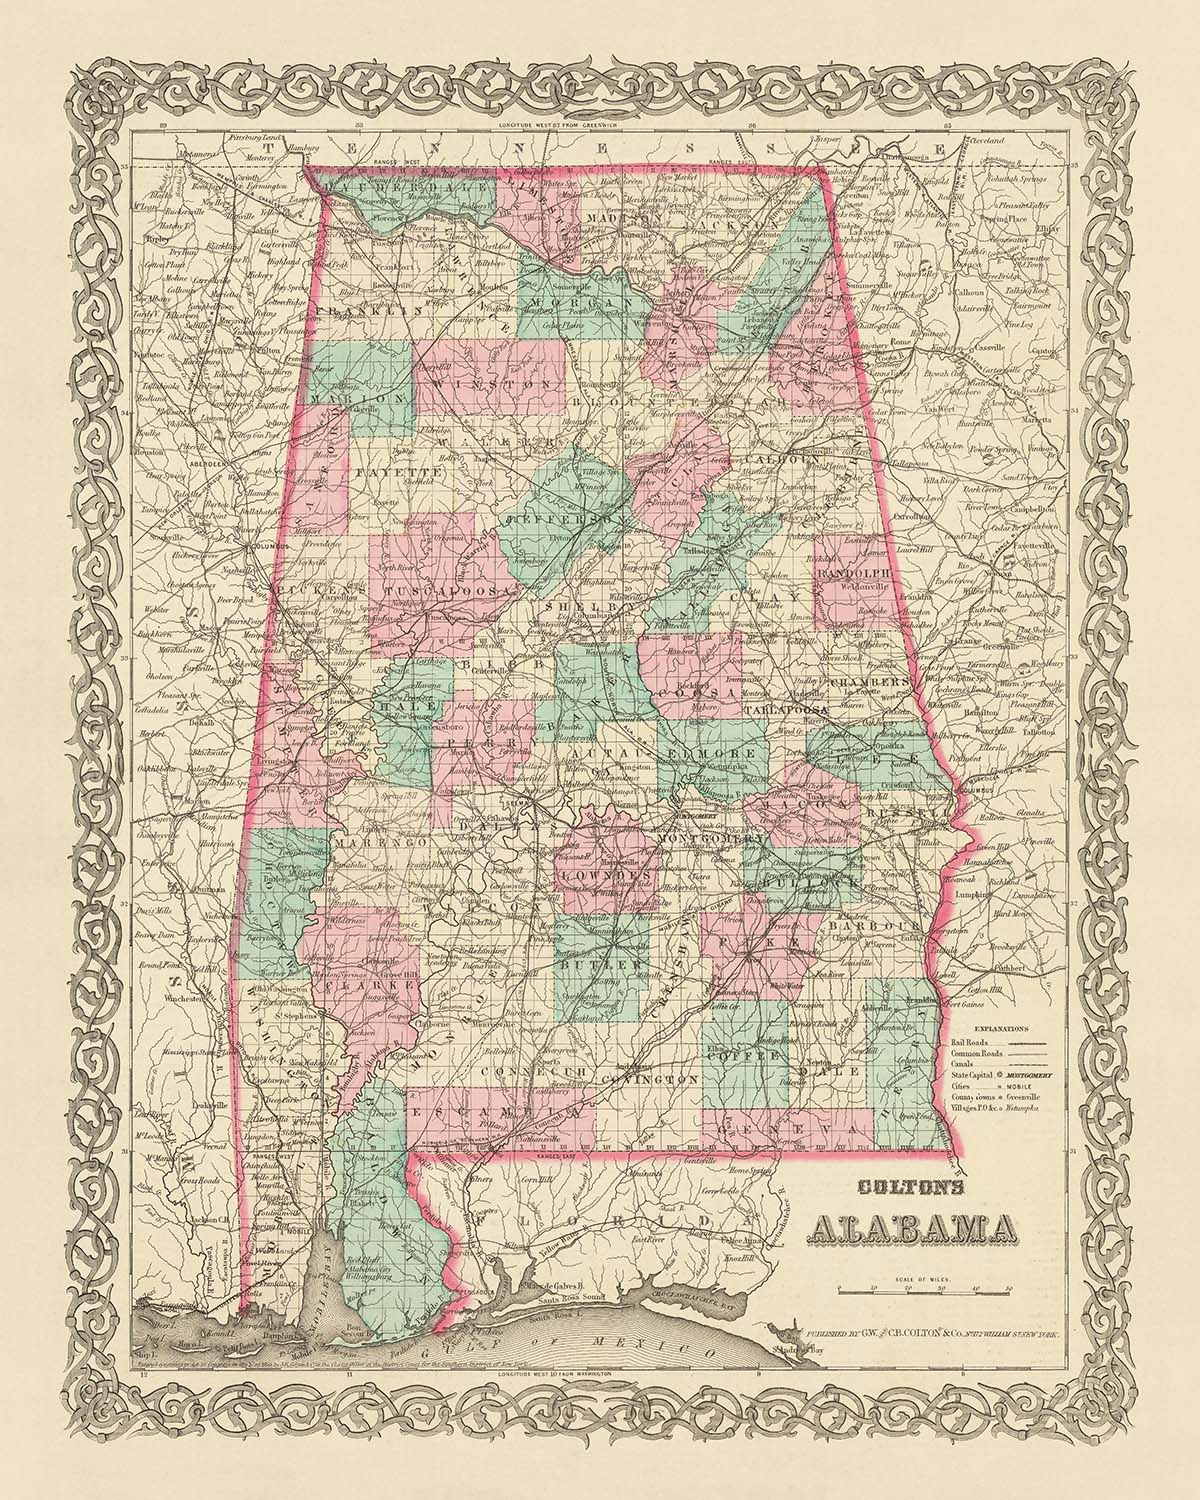 Ancienne carte de l'Alabama, 1855 par JH Colton : Mobile, Montgomery, Huntsville, Tuscaloosa et Selma